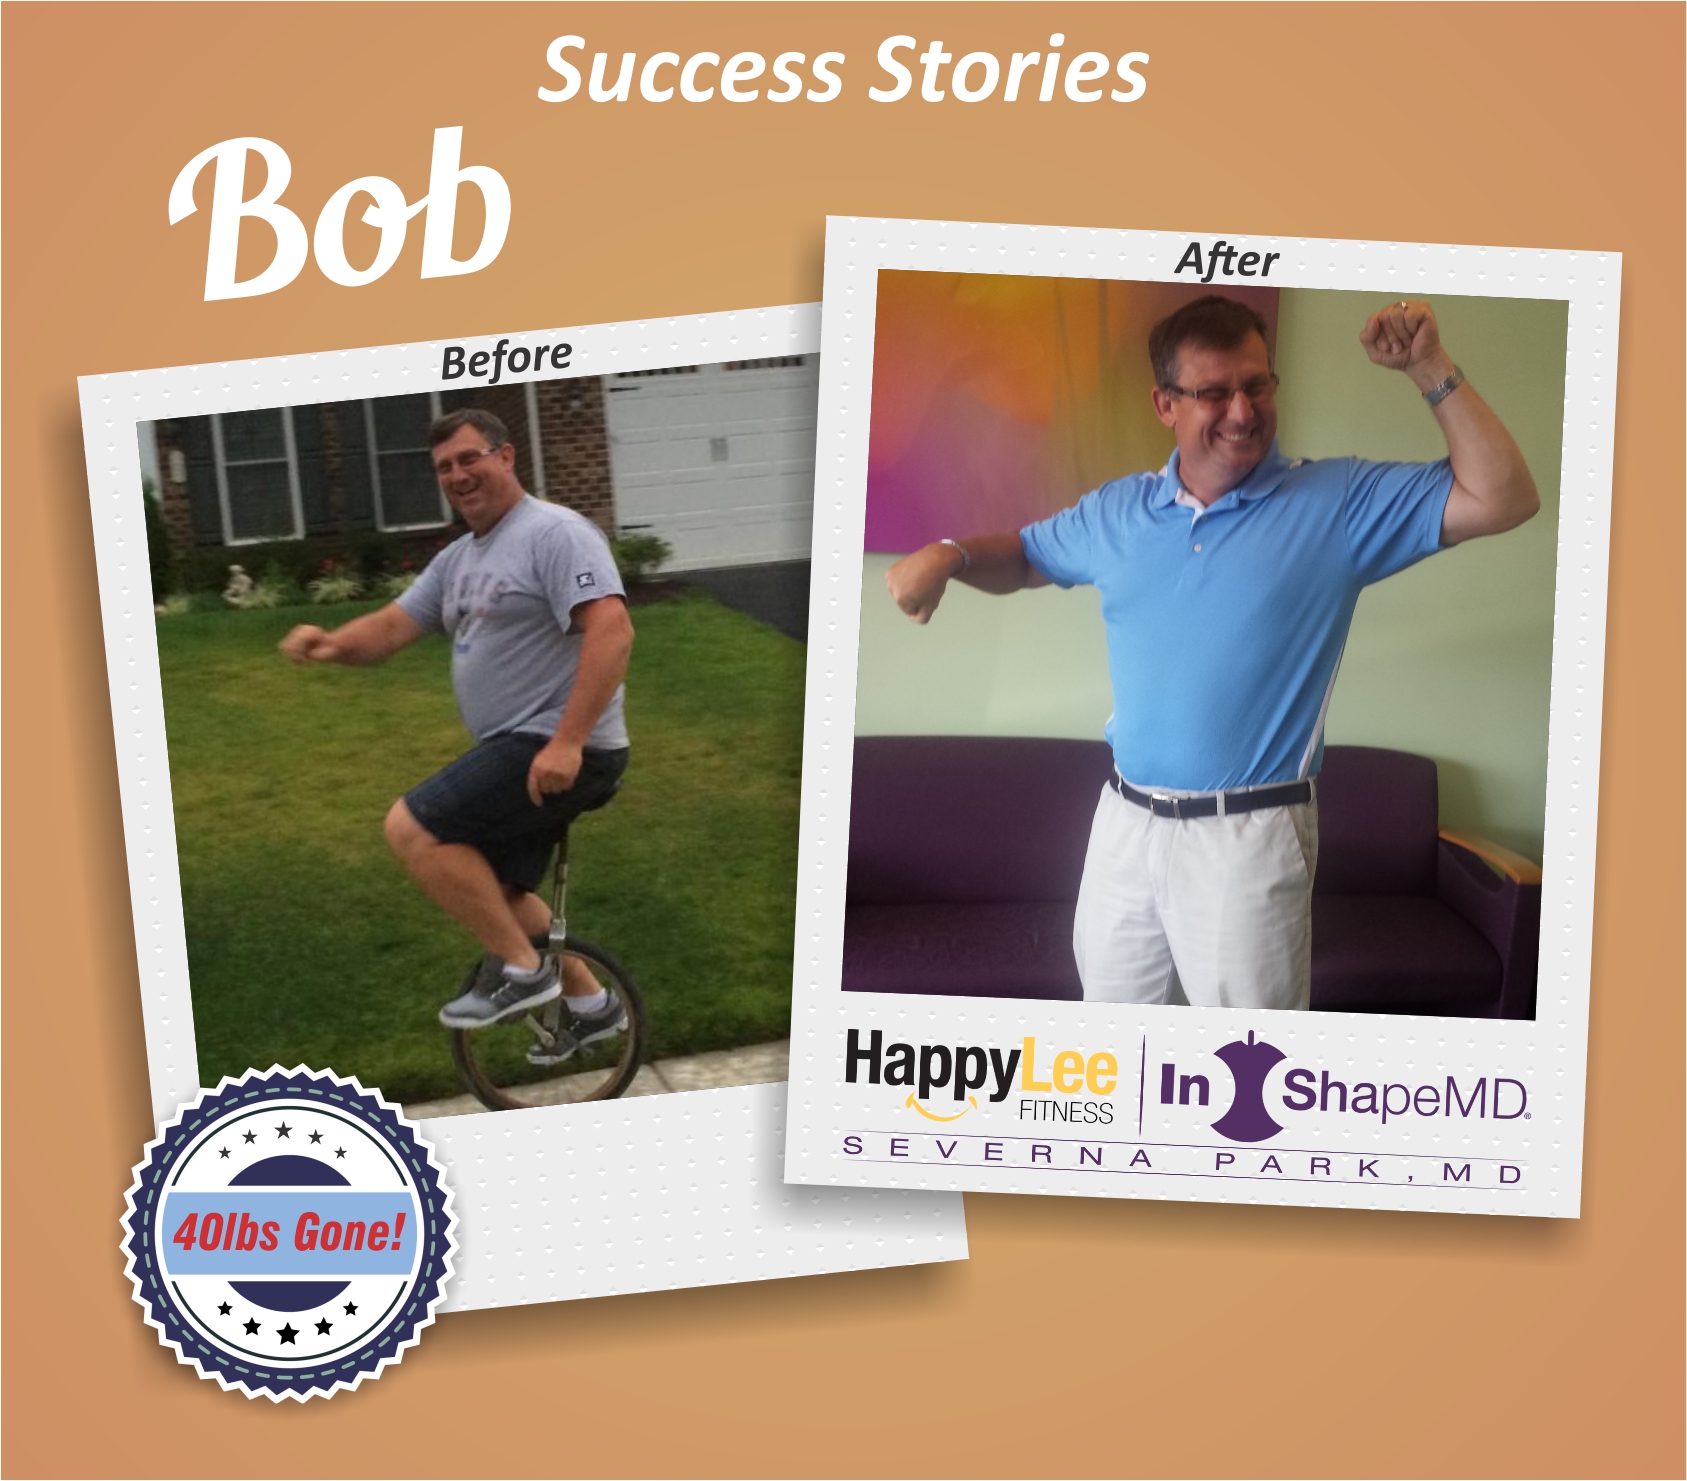 Bob's Weight Loss Story